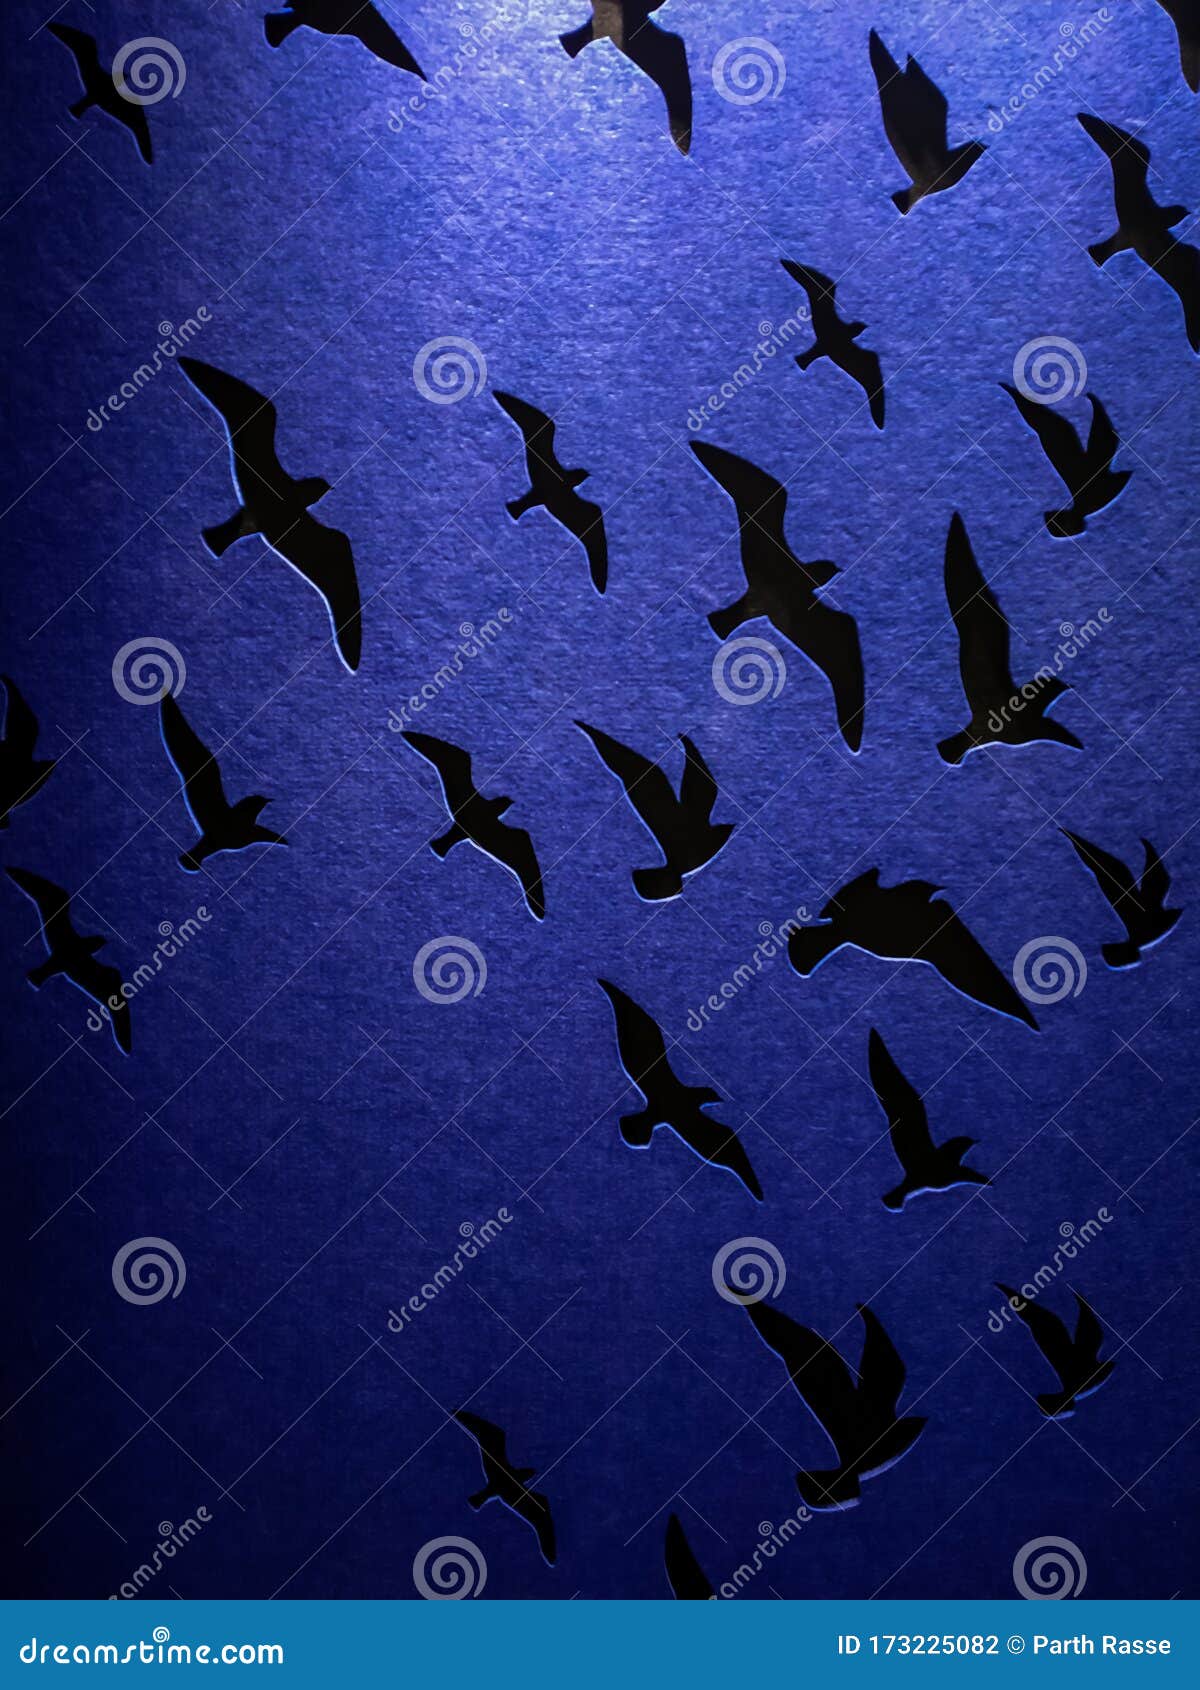 Flying Birds 3d Wallpaper in Interior Design Stock Photo - Image of  background, pigeon: 173225082